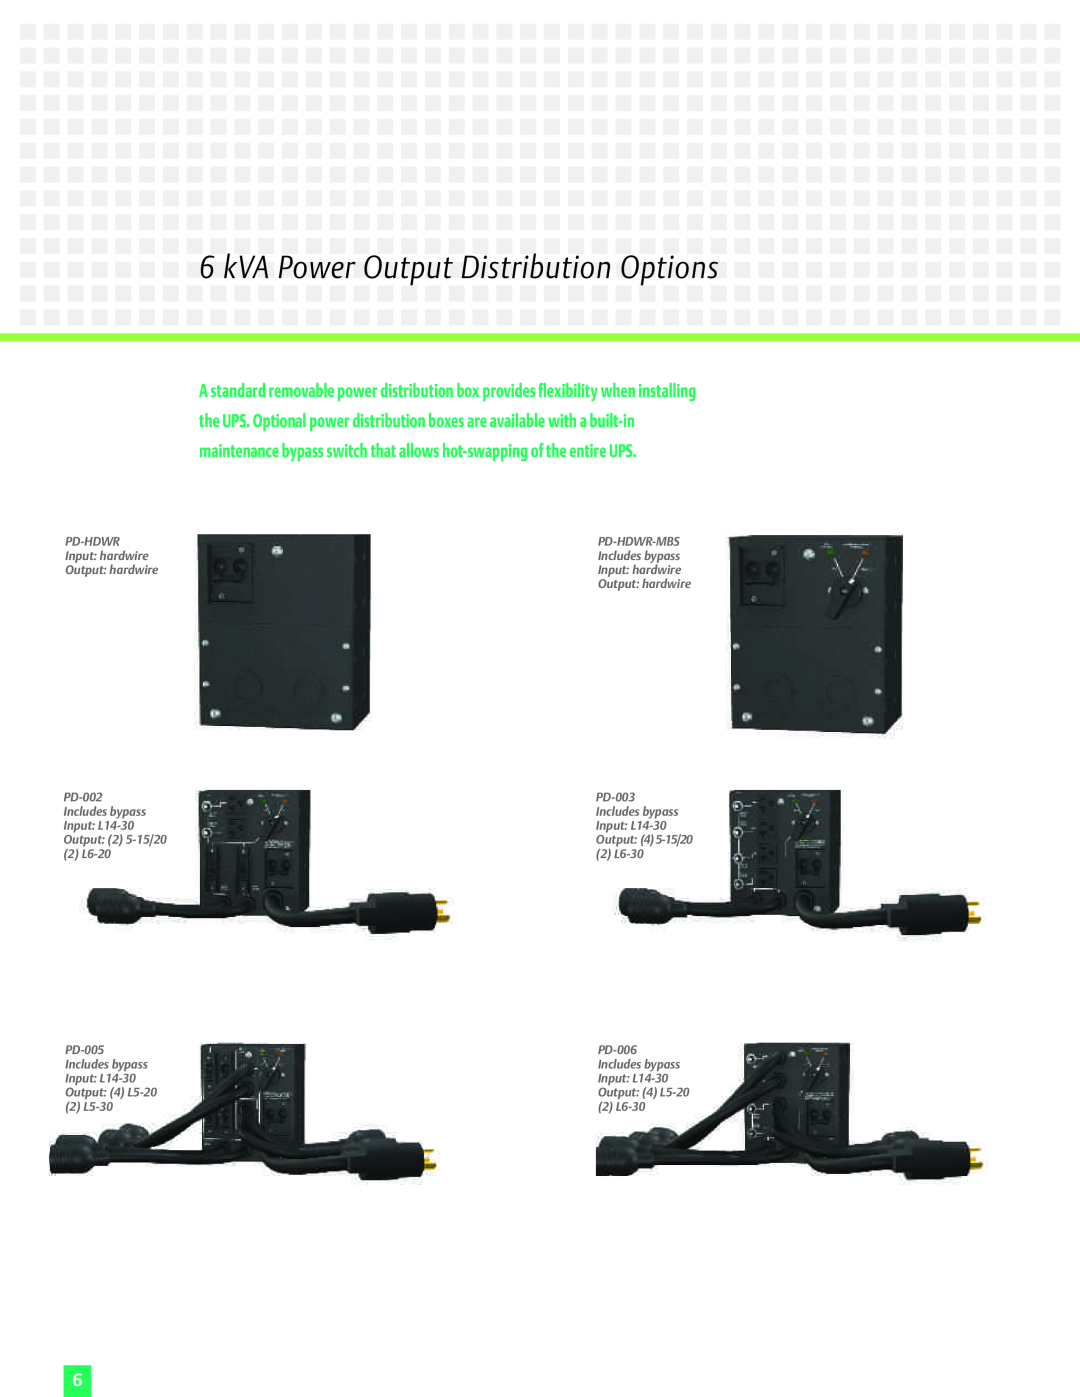 Emerson 6 kVA 6kVA Power OutputDistribution Options, Pd-Hdwr-Mbs, Input hardwire, Output hardwire, PD-002, PD-003 